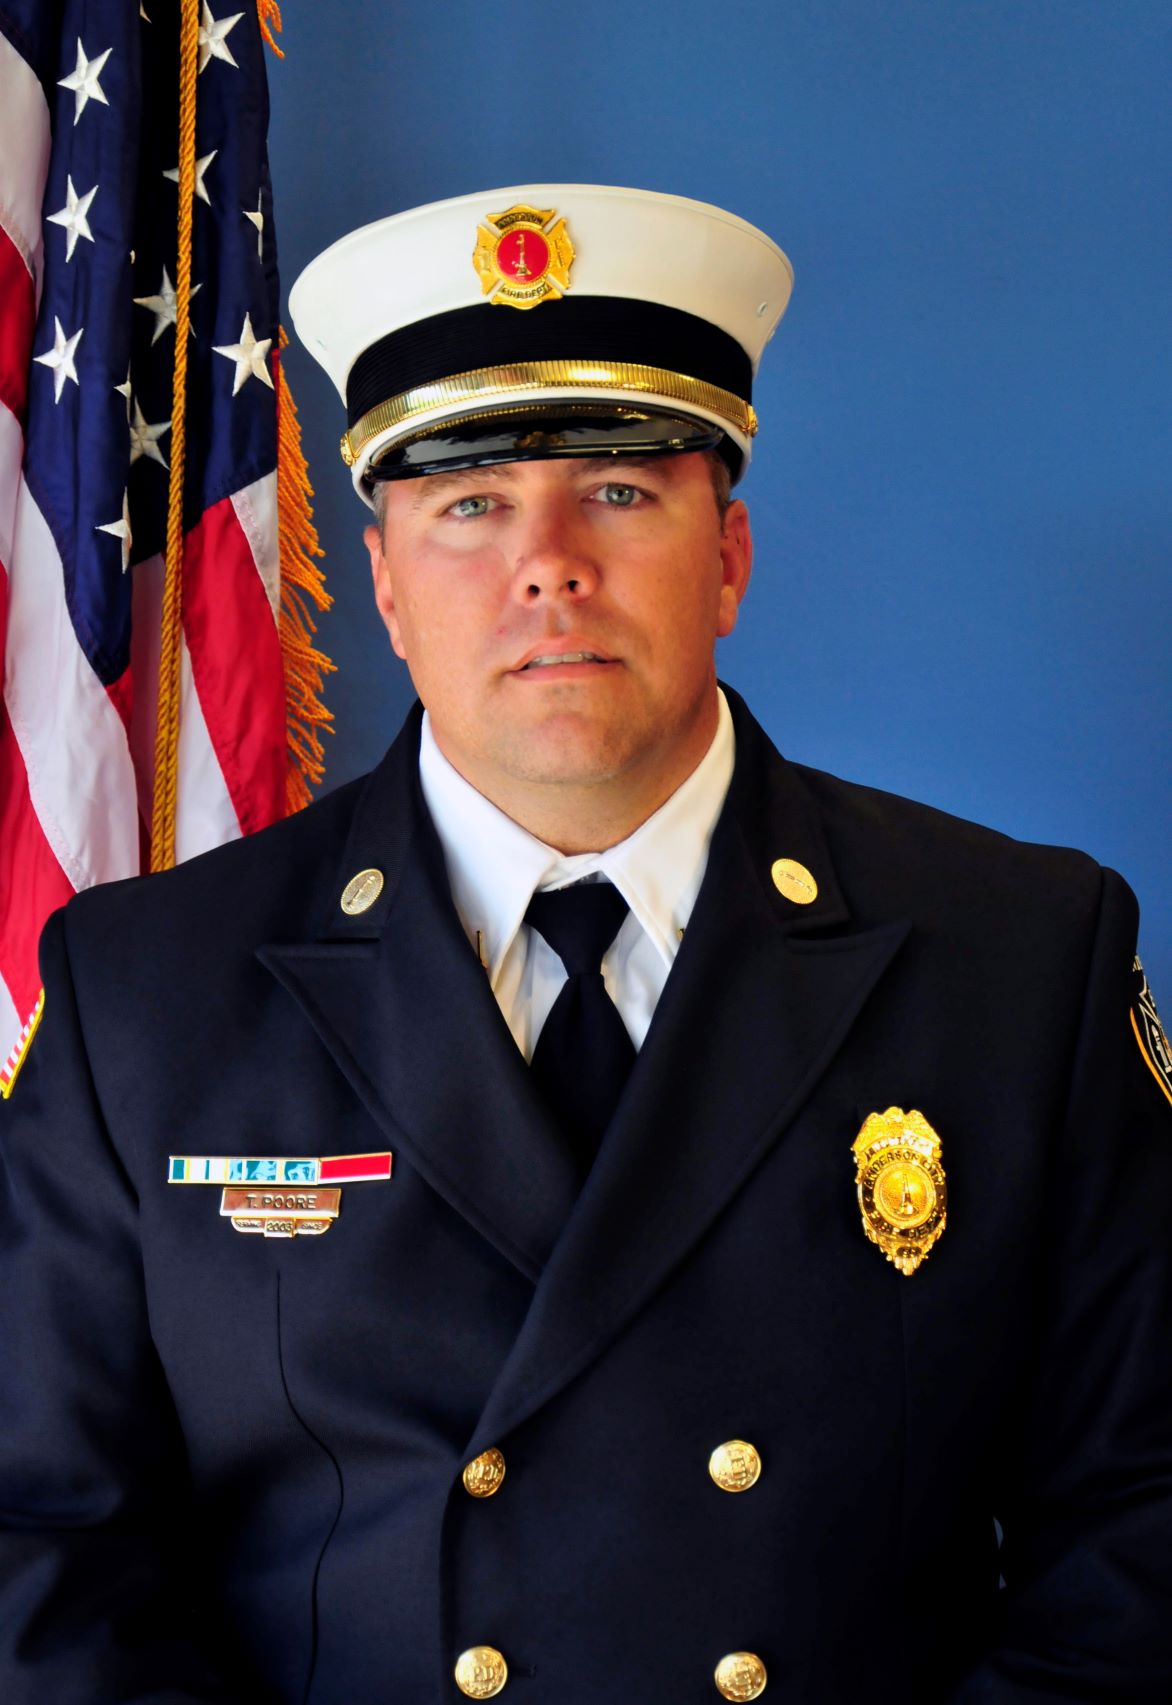 Lt. Travis Poore, public information officer, Anderson Fire Department